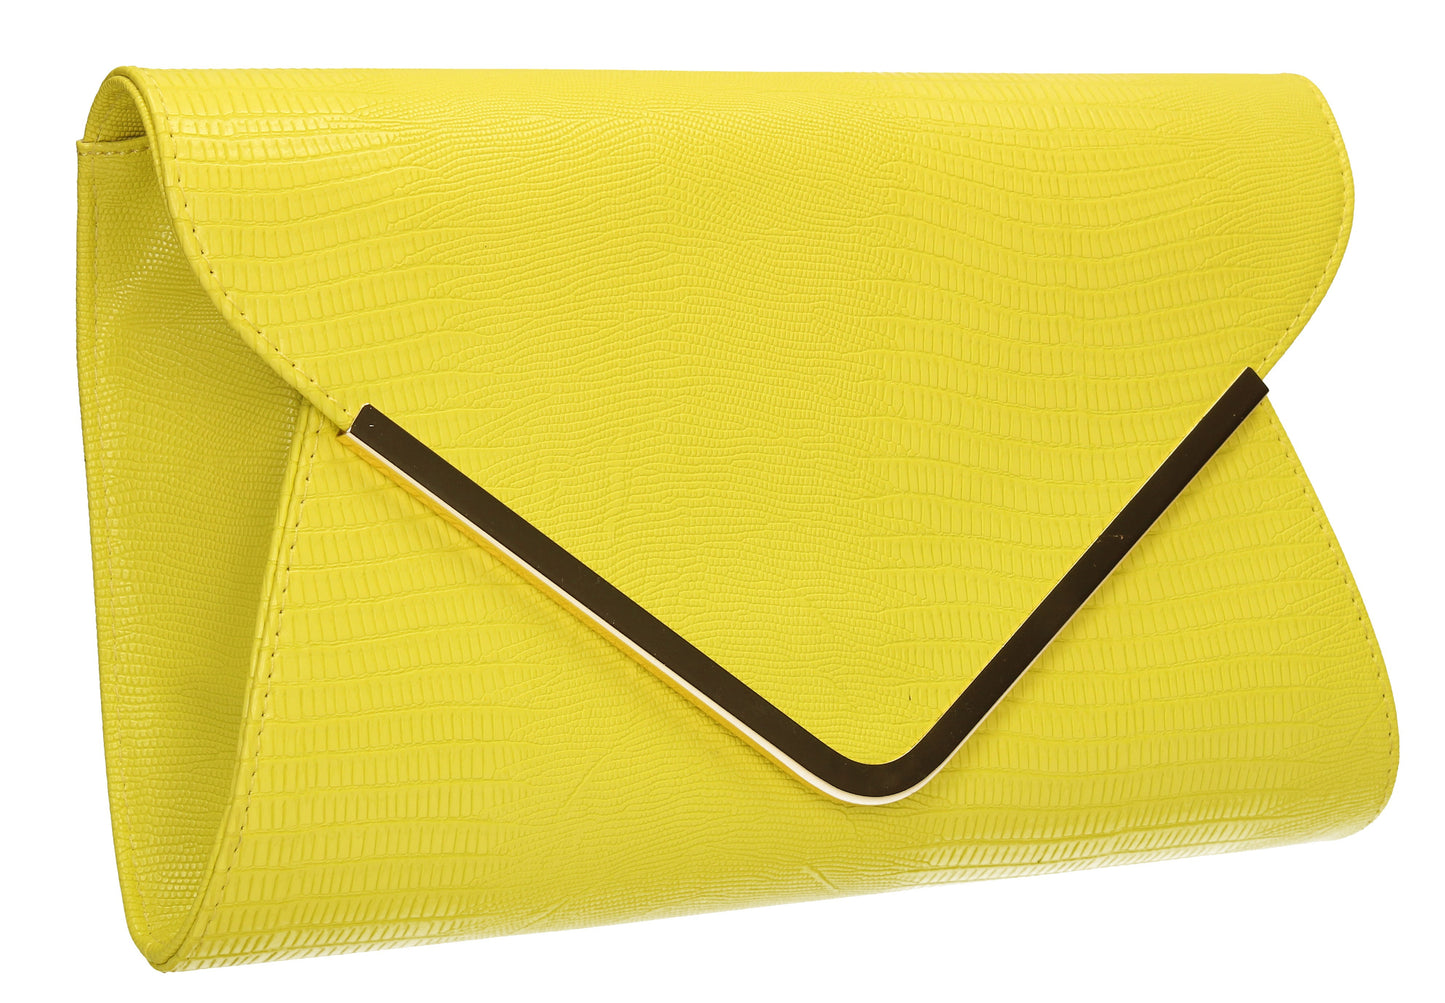 SWANKYSWANS Lauren Clutch Bag Yellow Cute Cheap Clutch Bag For Weddings School and Work